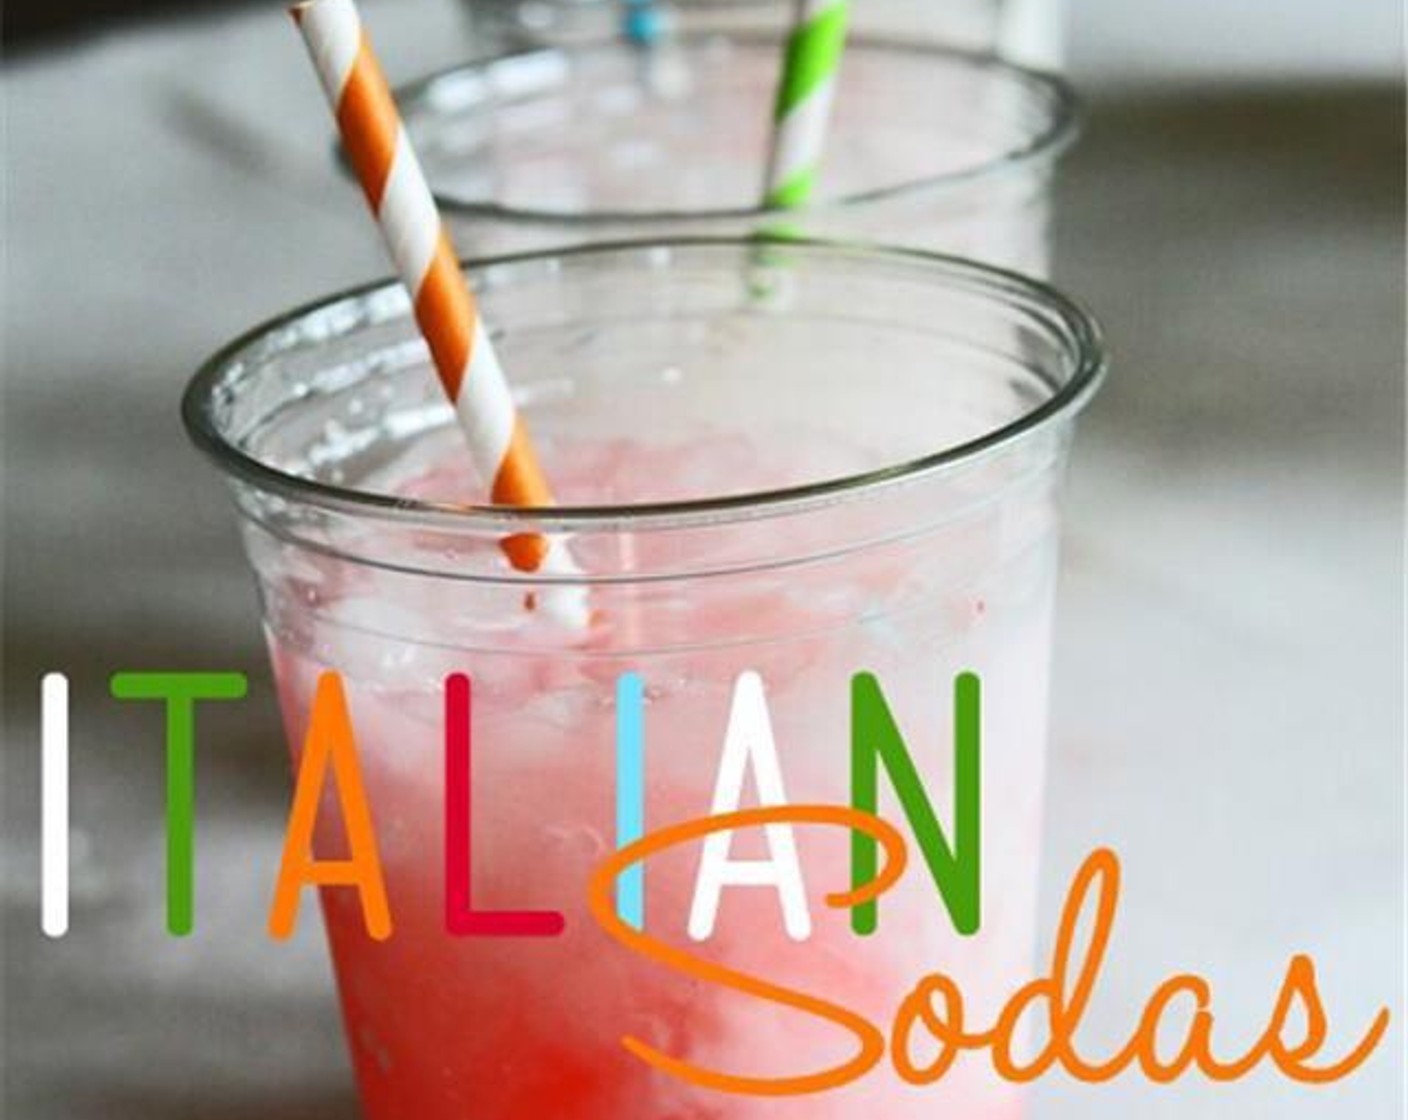 Italian Soda